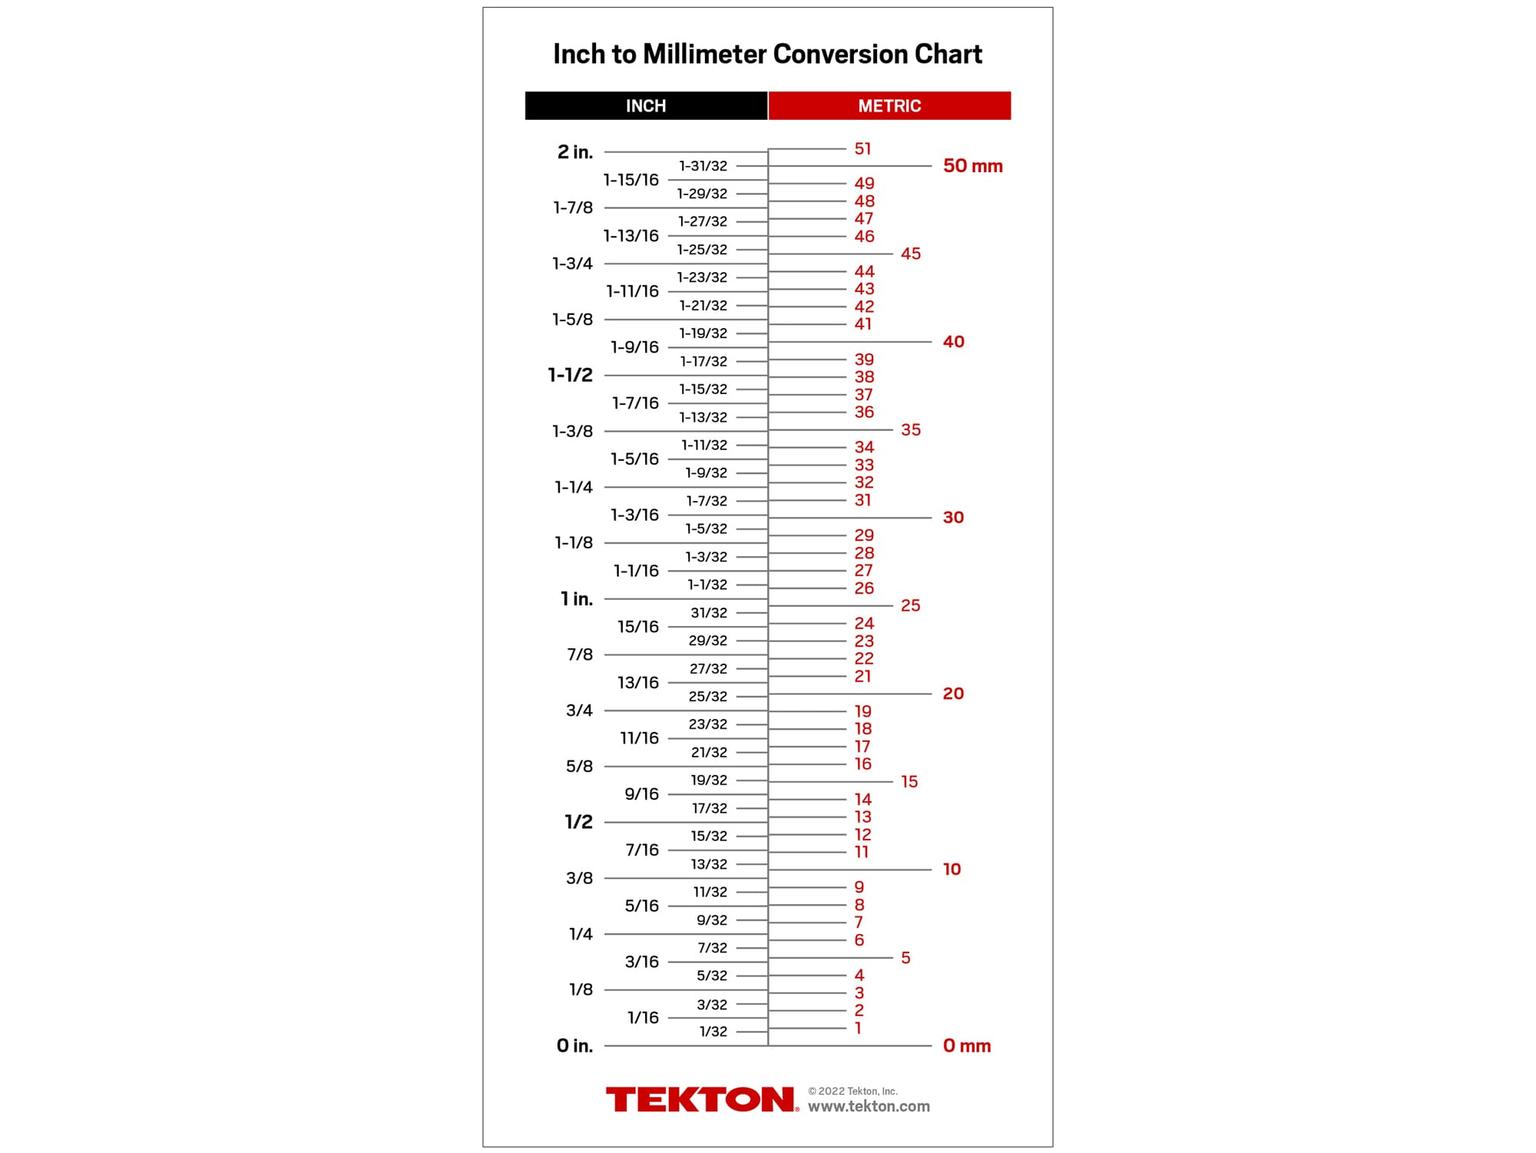 TEKTON APG40003-T Conversion Chart Magnet (4 x 8 in.)